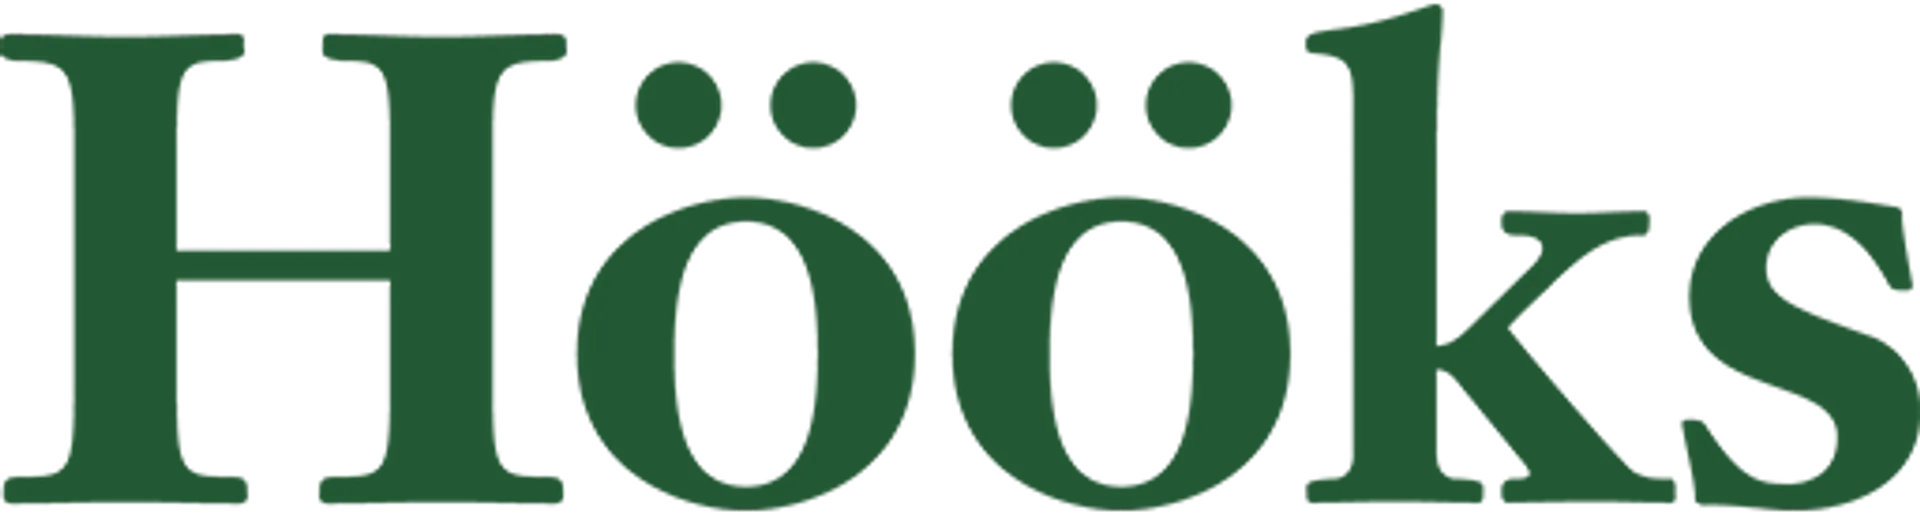 HÖÖKS logo